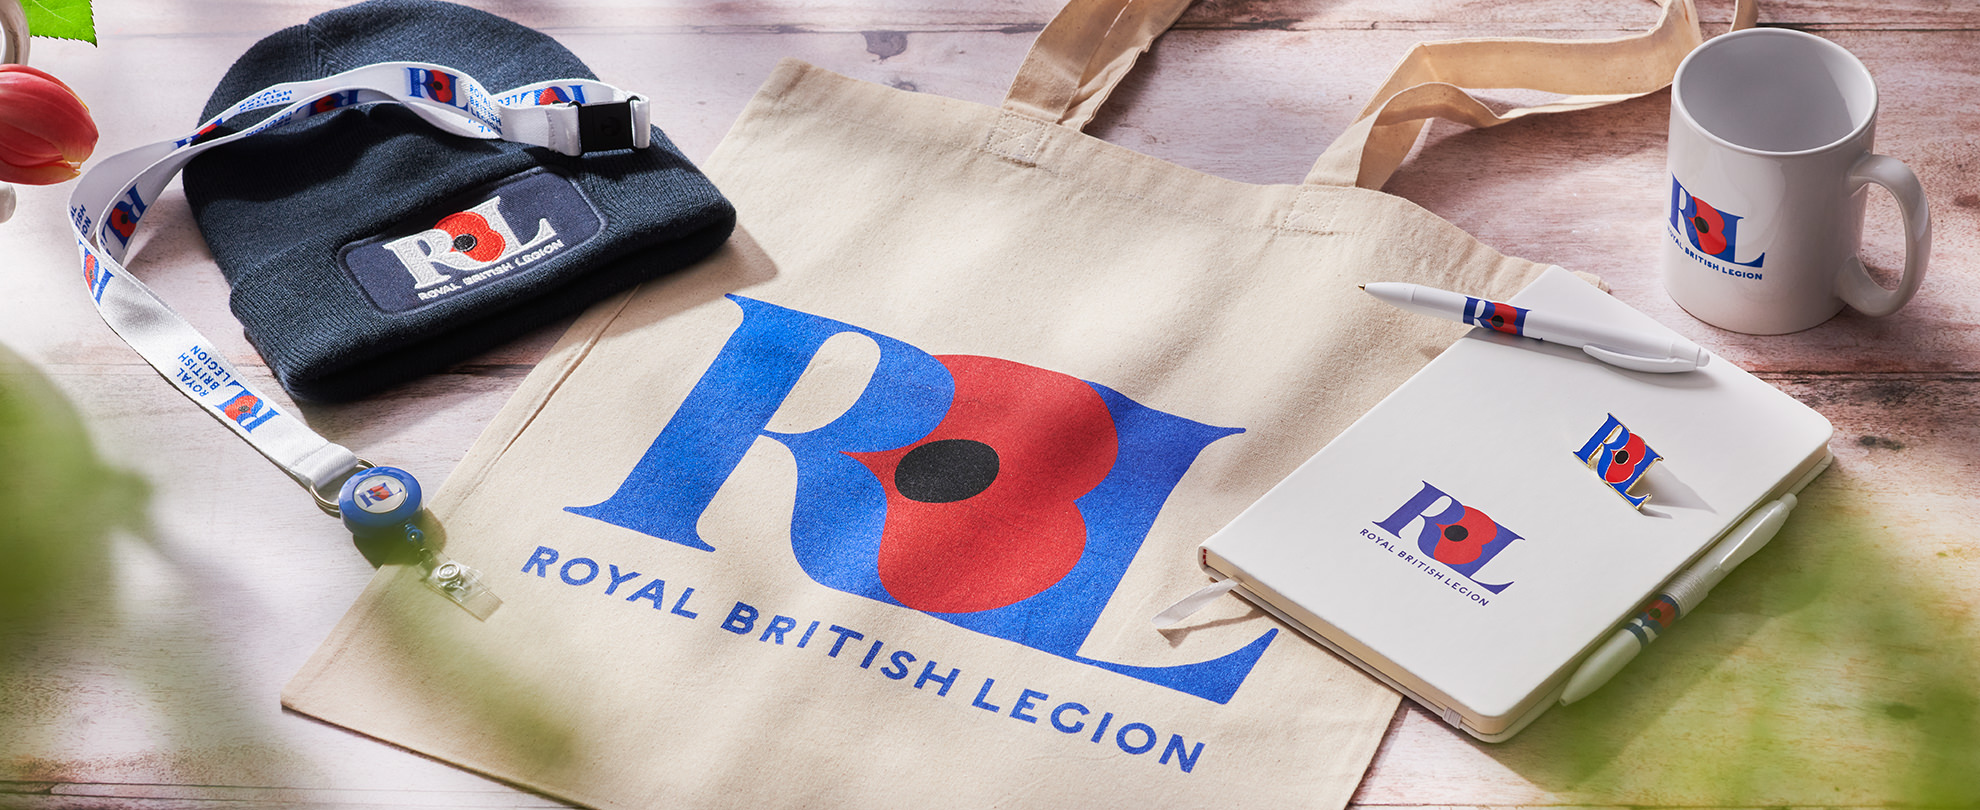 Royal British Legion Blue Cycle Shirt / XL